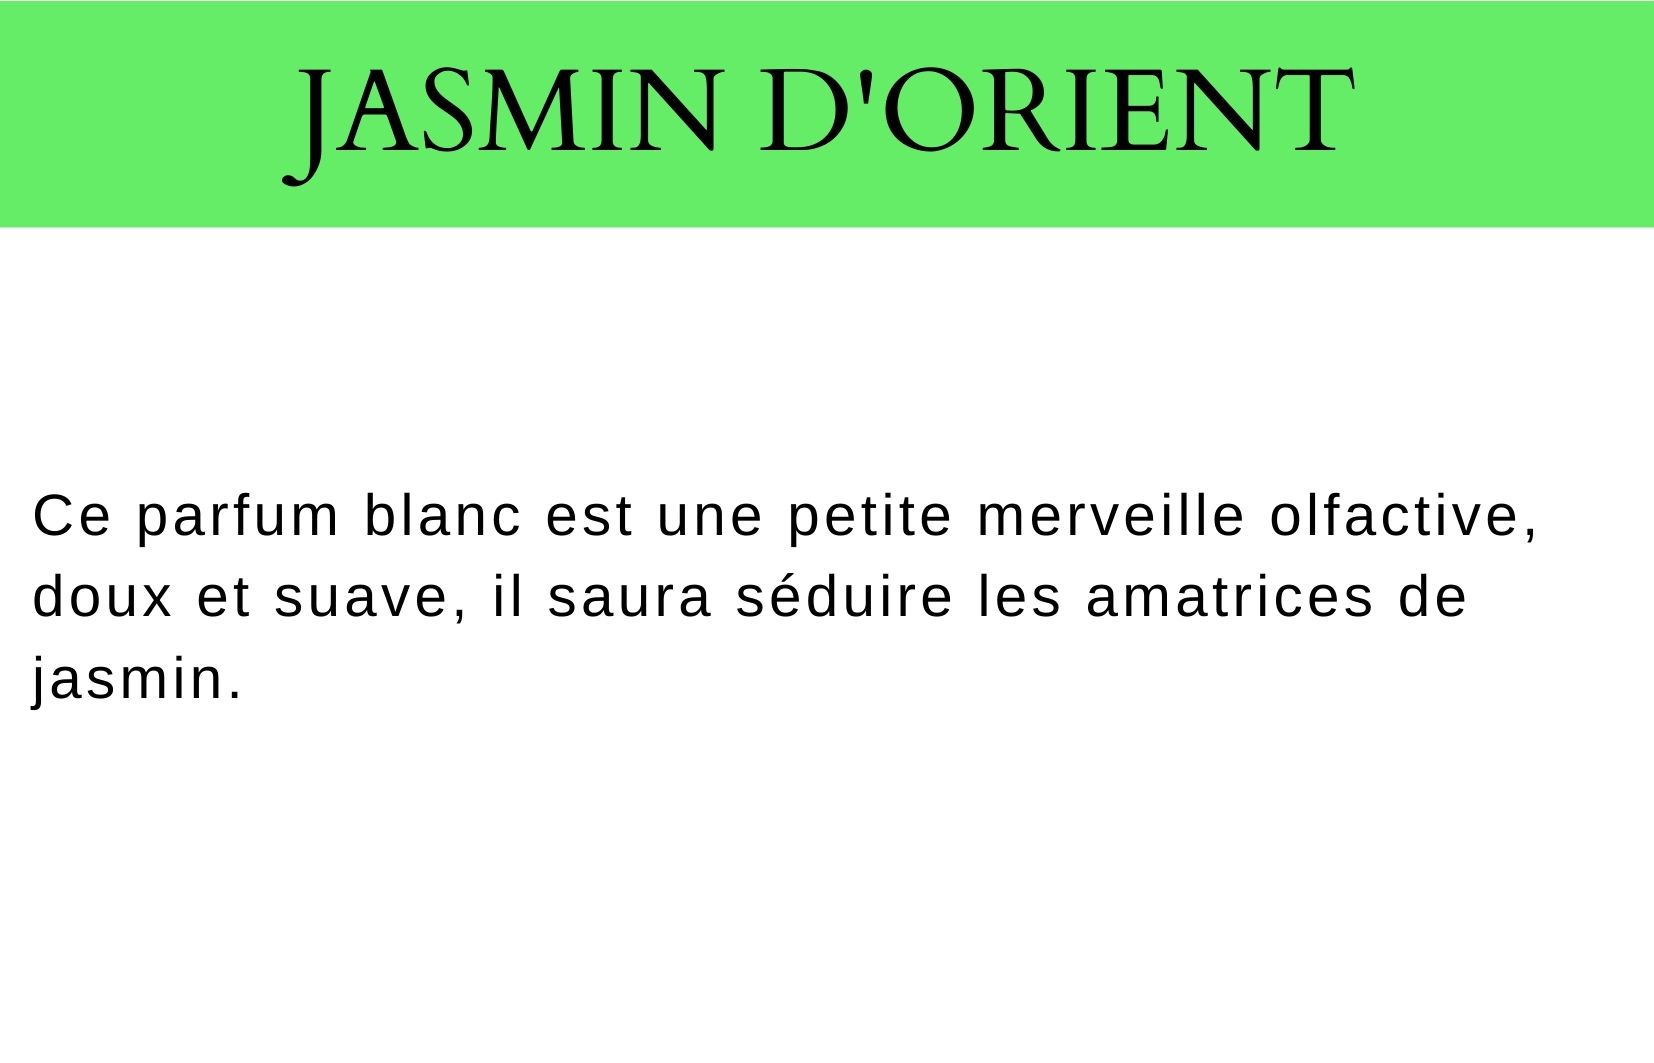 Jasmin d'Orient fragrance